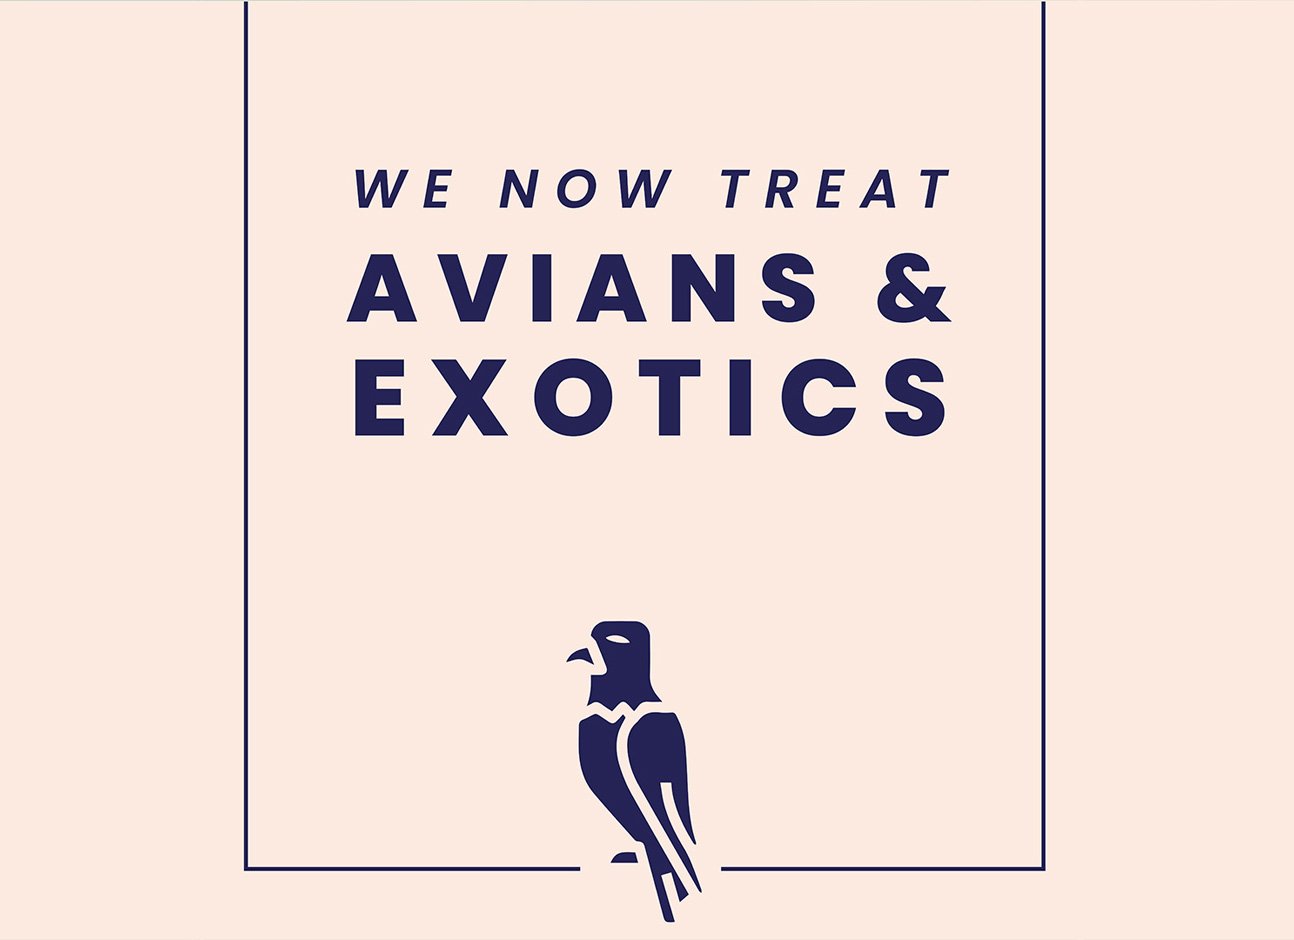 Avians and exotics logo